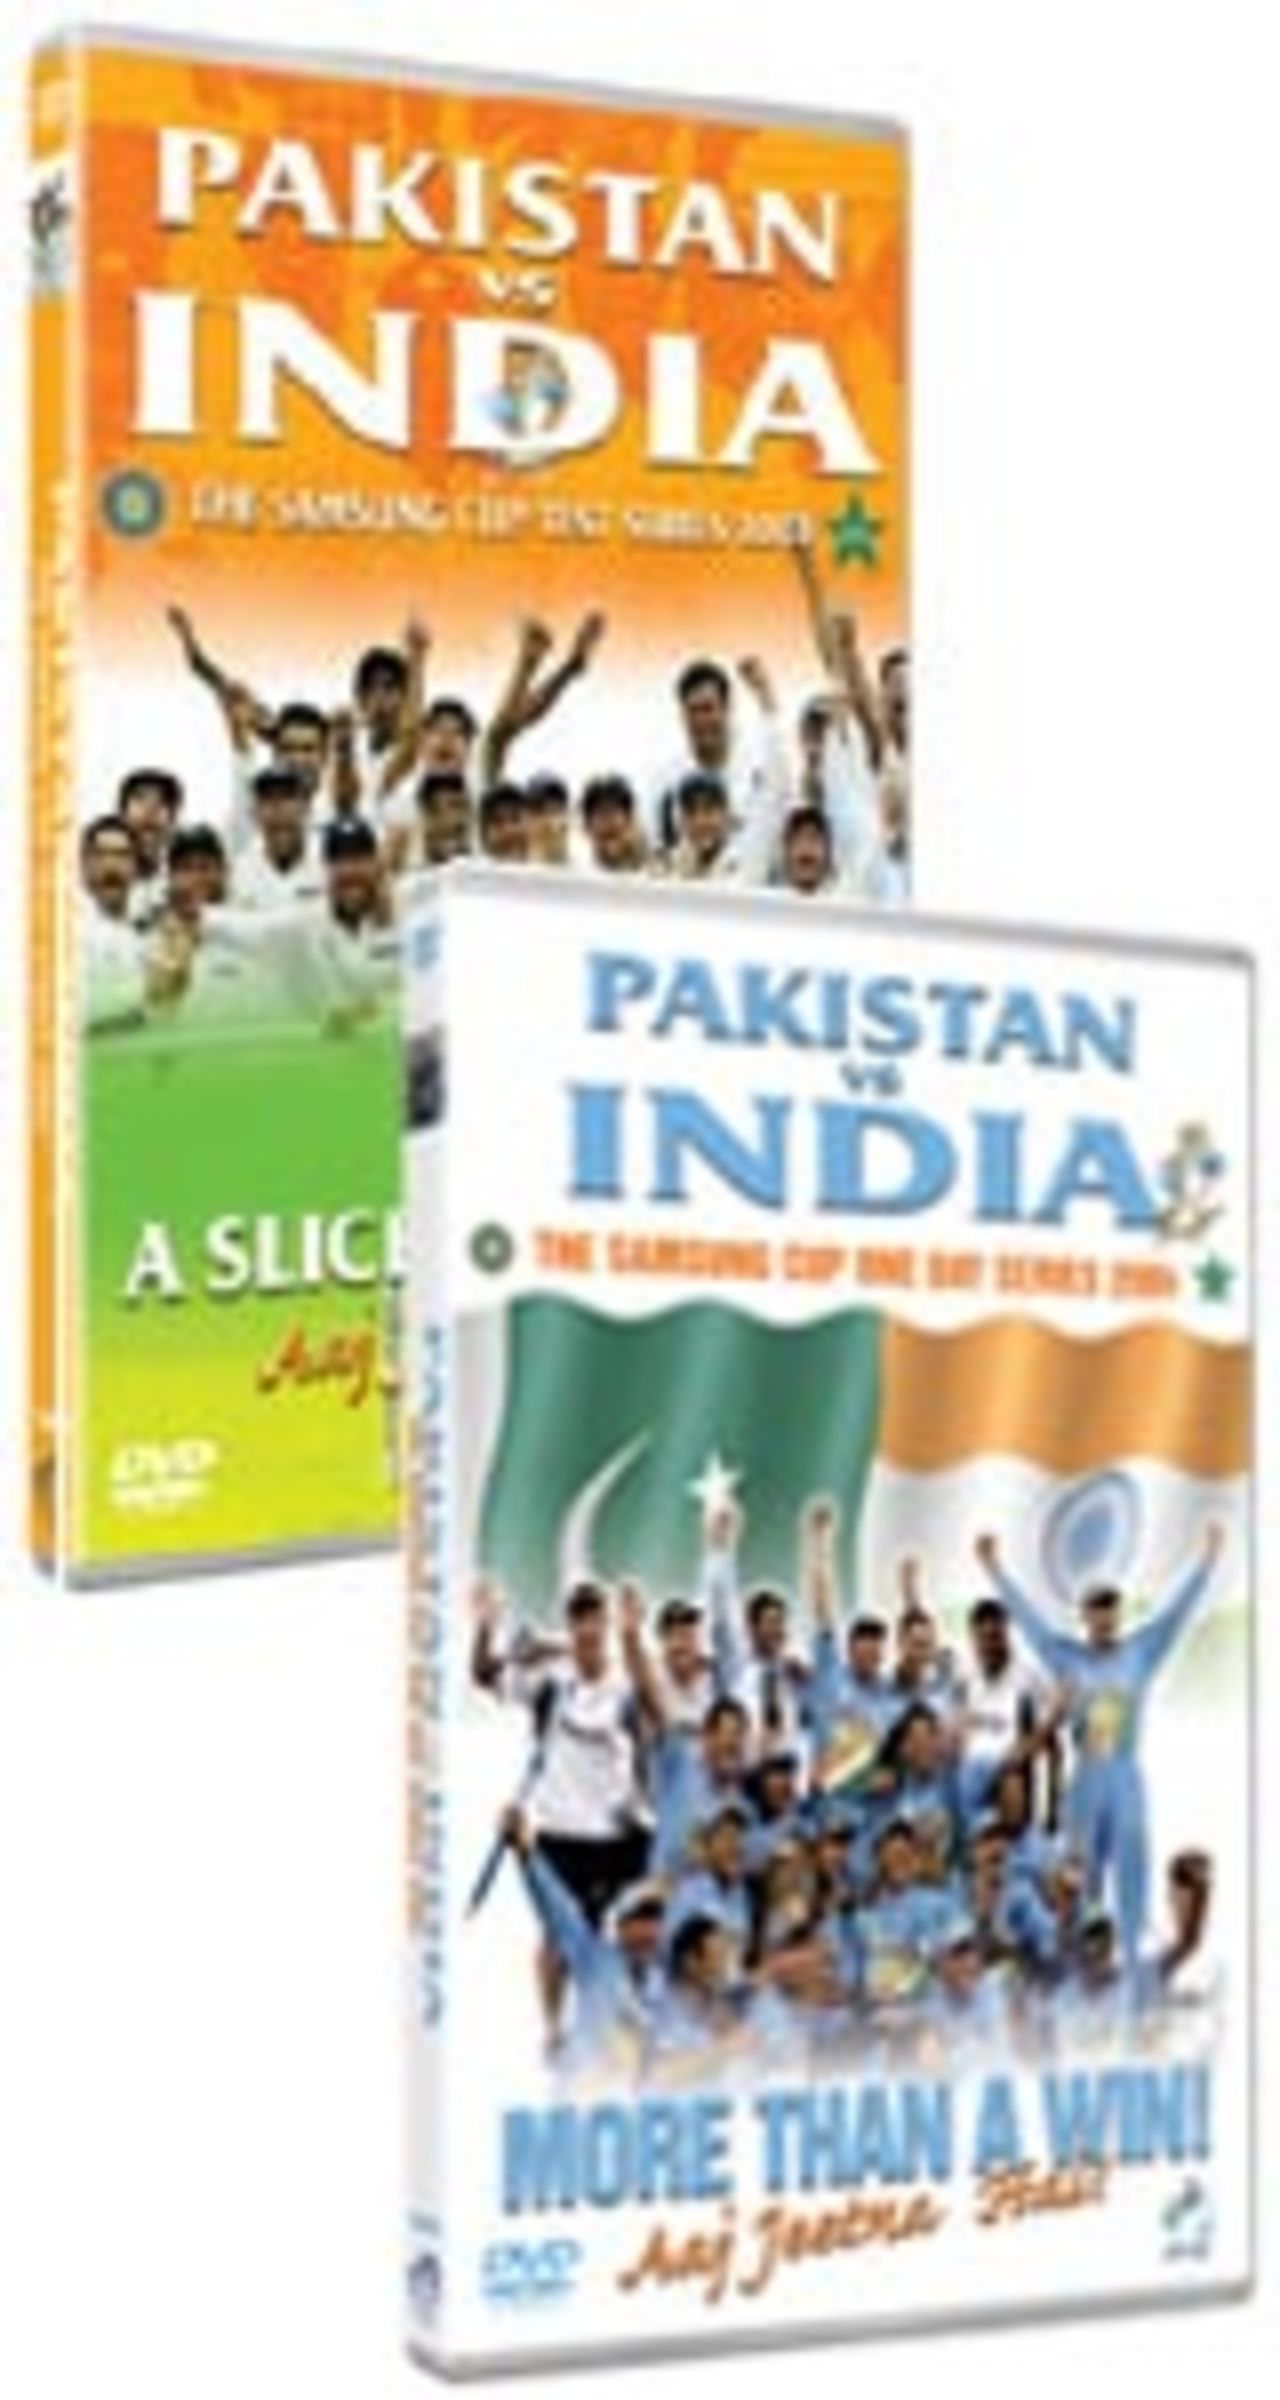 Pakistan v India Test & ODI series DVD covers